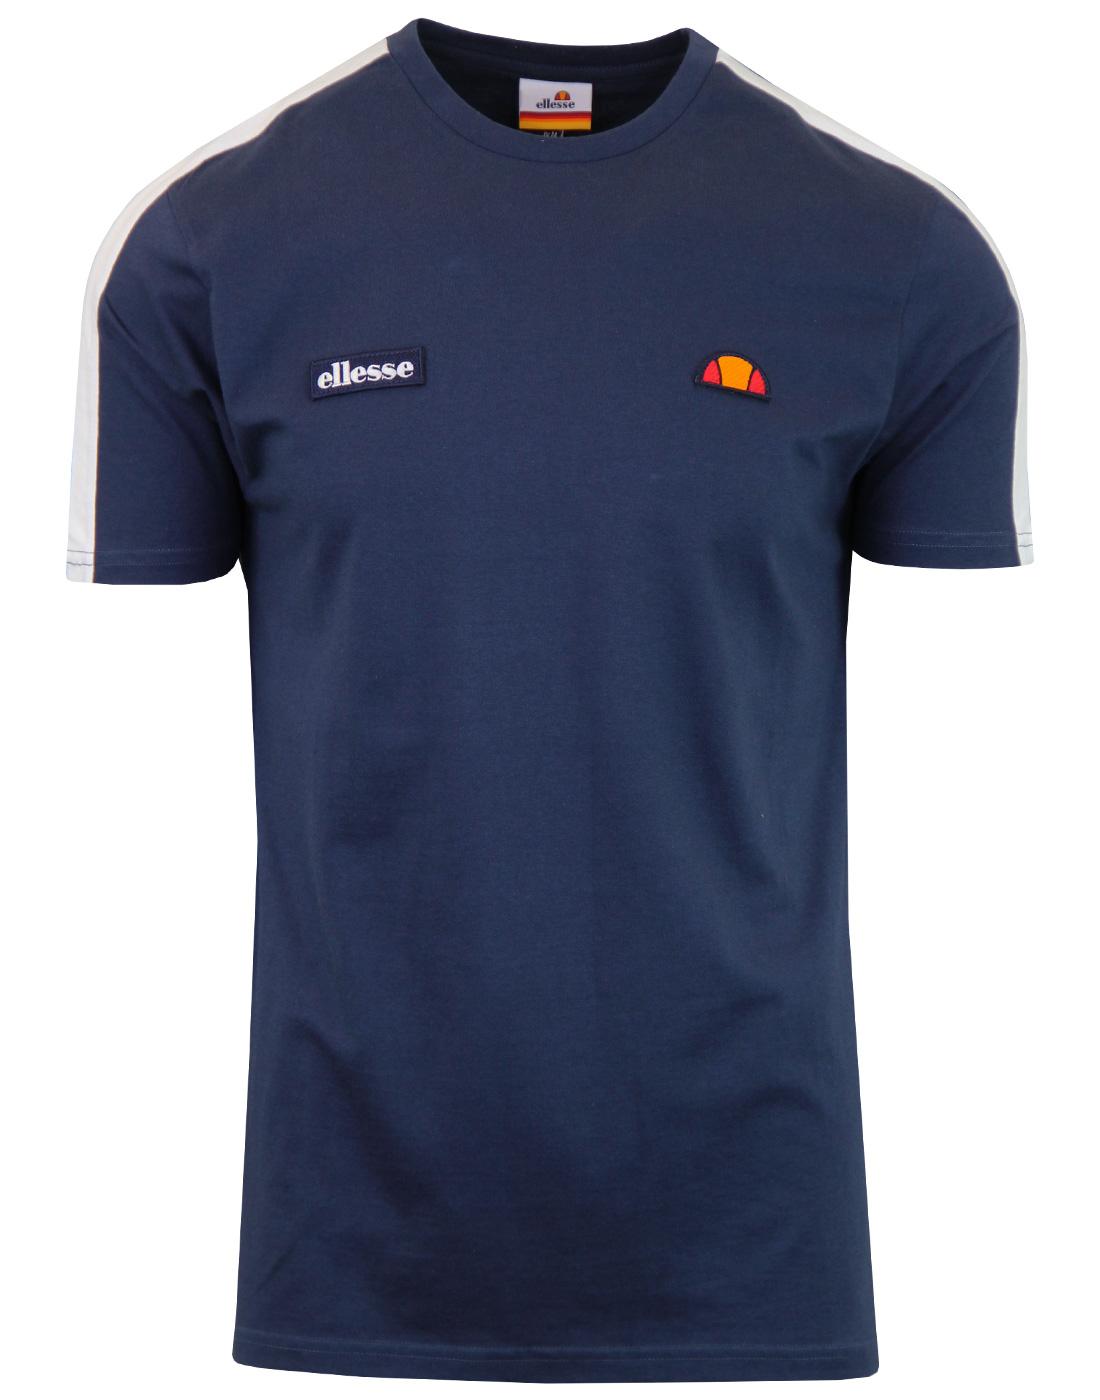 Crotone ELLESSE Retro 80s Applique Logo T-shirt DB